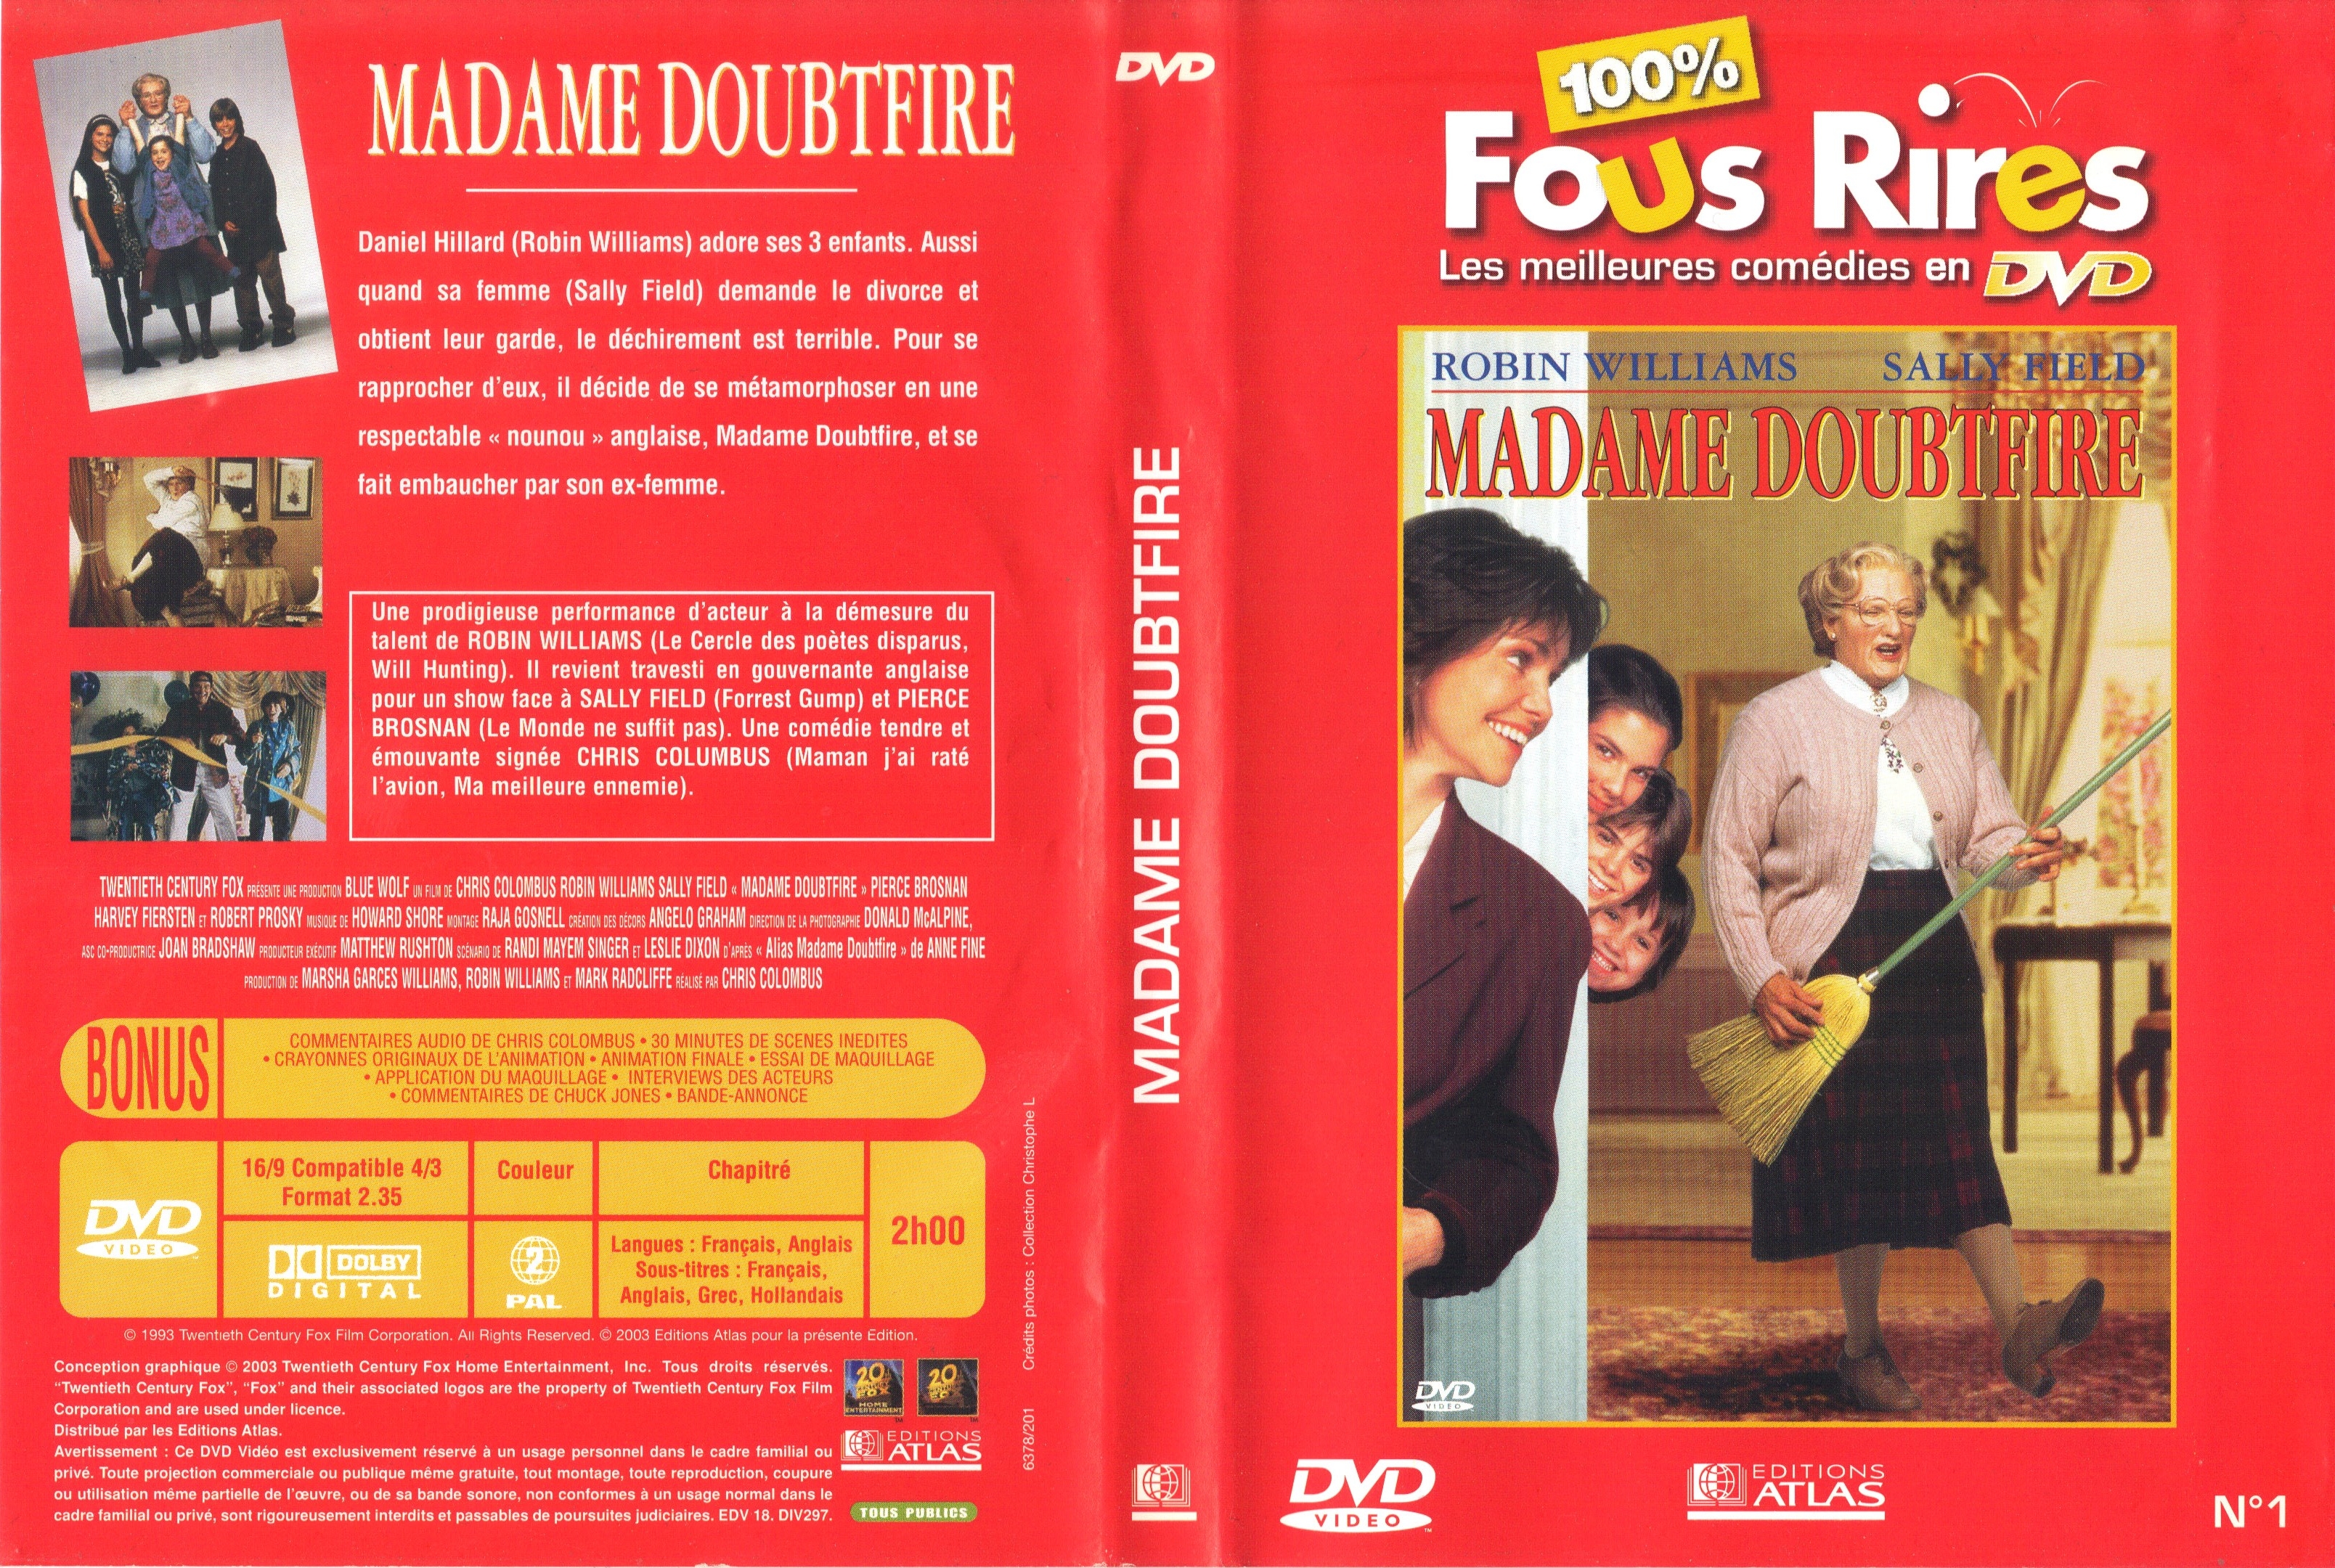 Jaquette DVD Madame Doubtfire v2